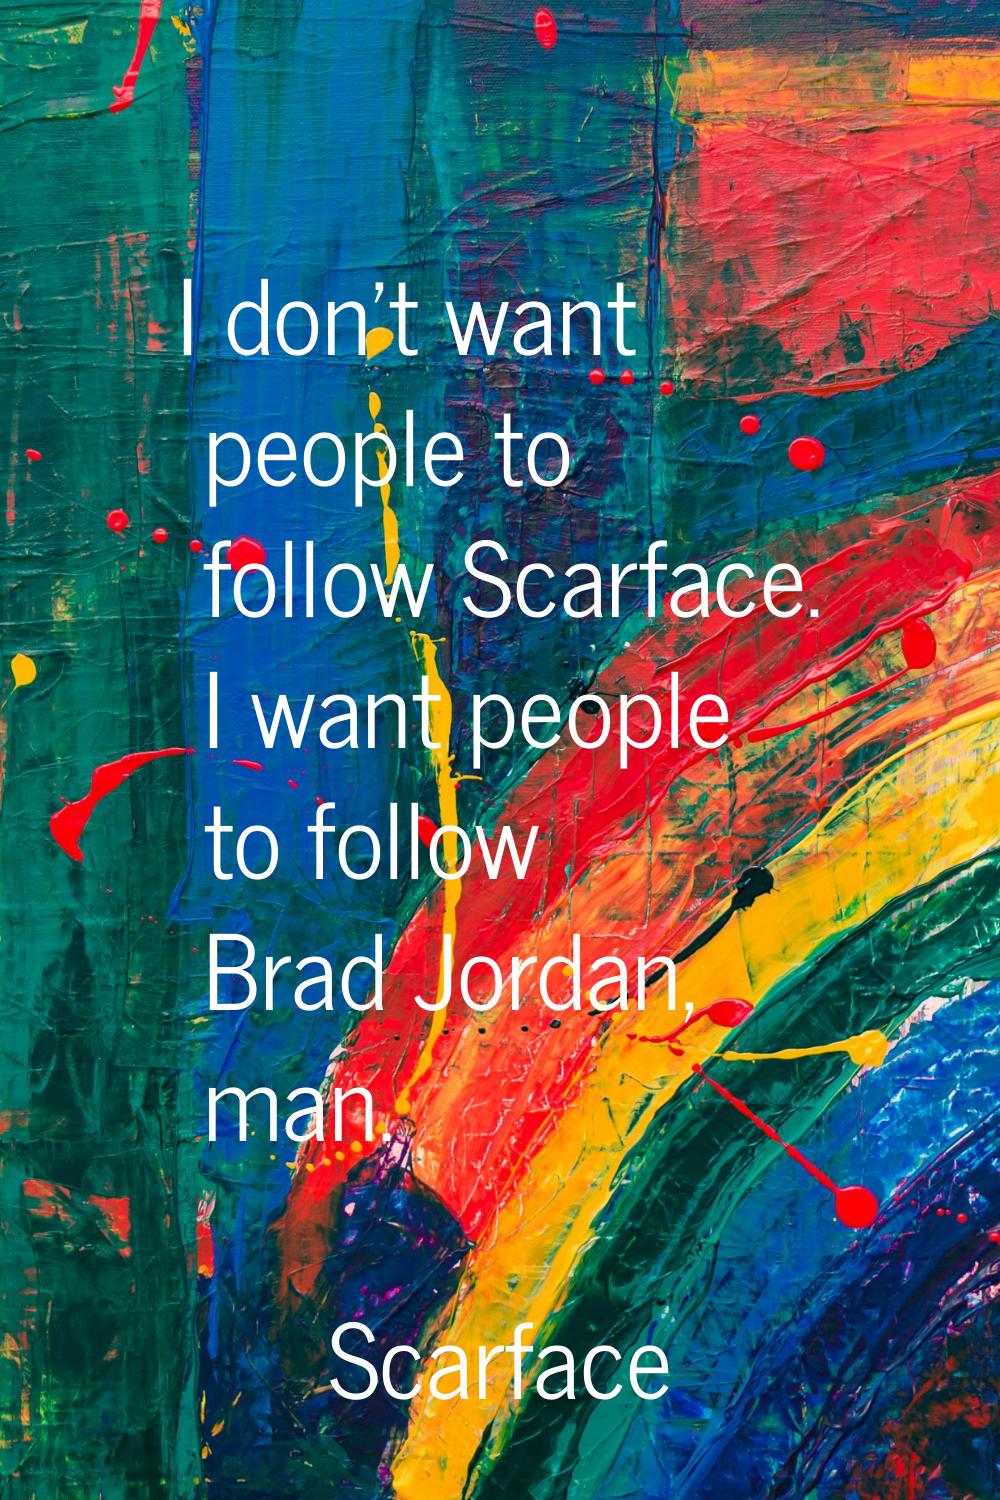 I don't want people to follow Scarface. I want people to follow Brad Jordan, man.